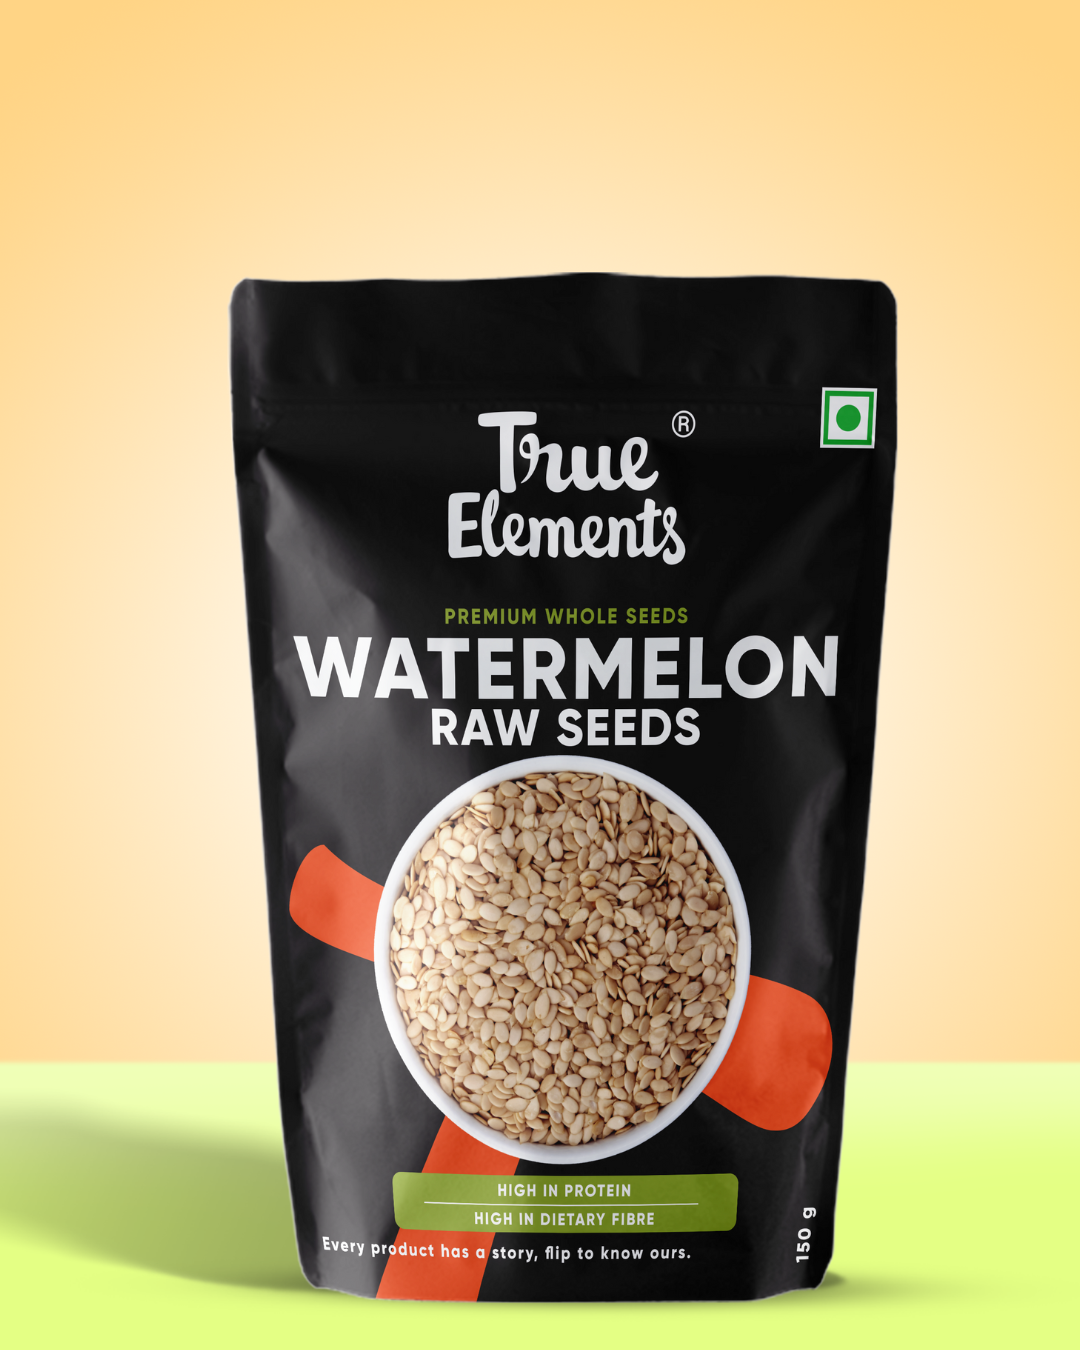 True elements raw watermelon seeds 150g Pouch (Premium Whole Seeds)